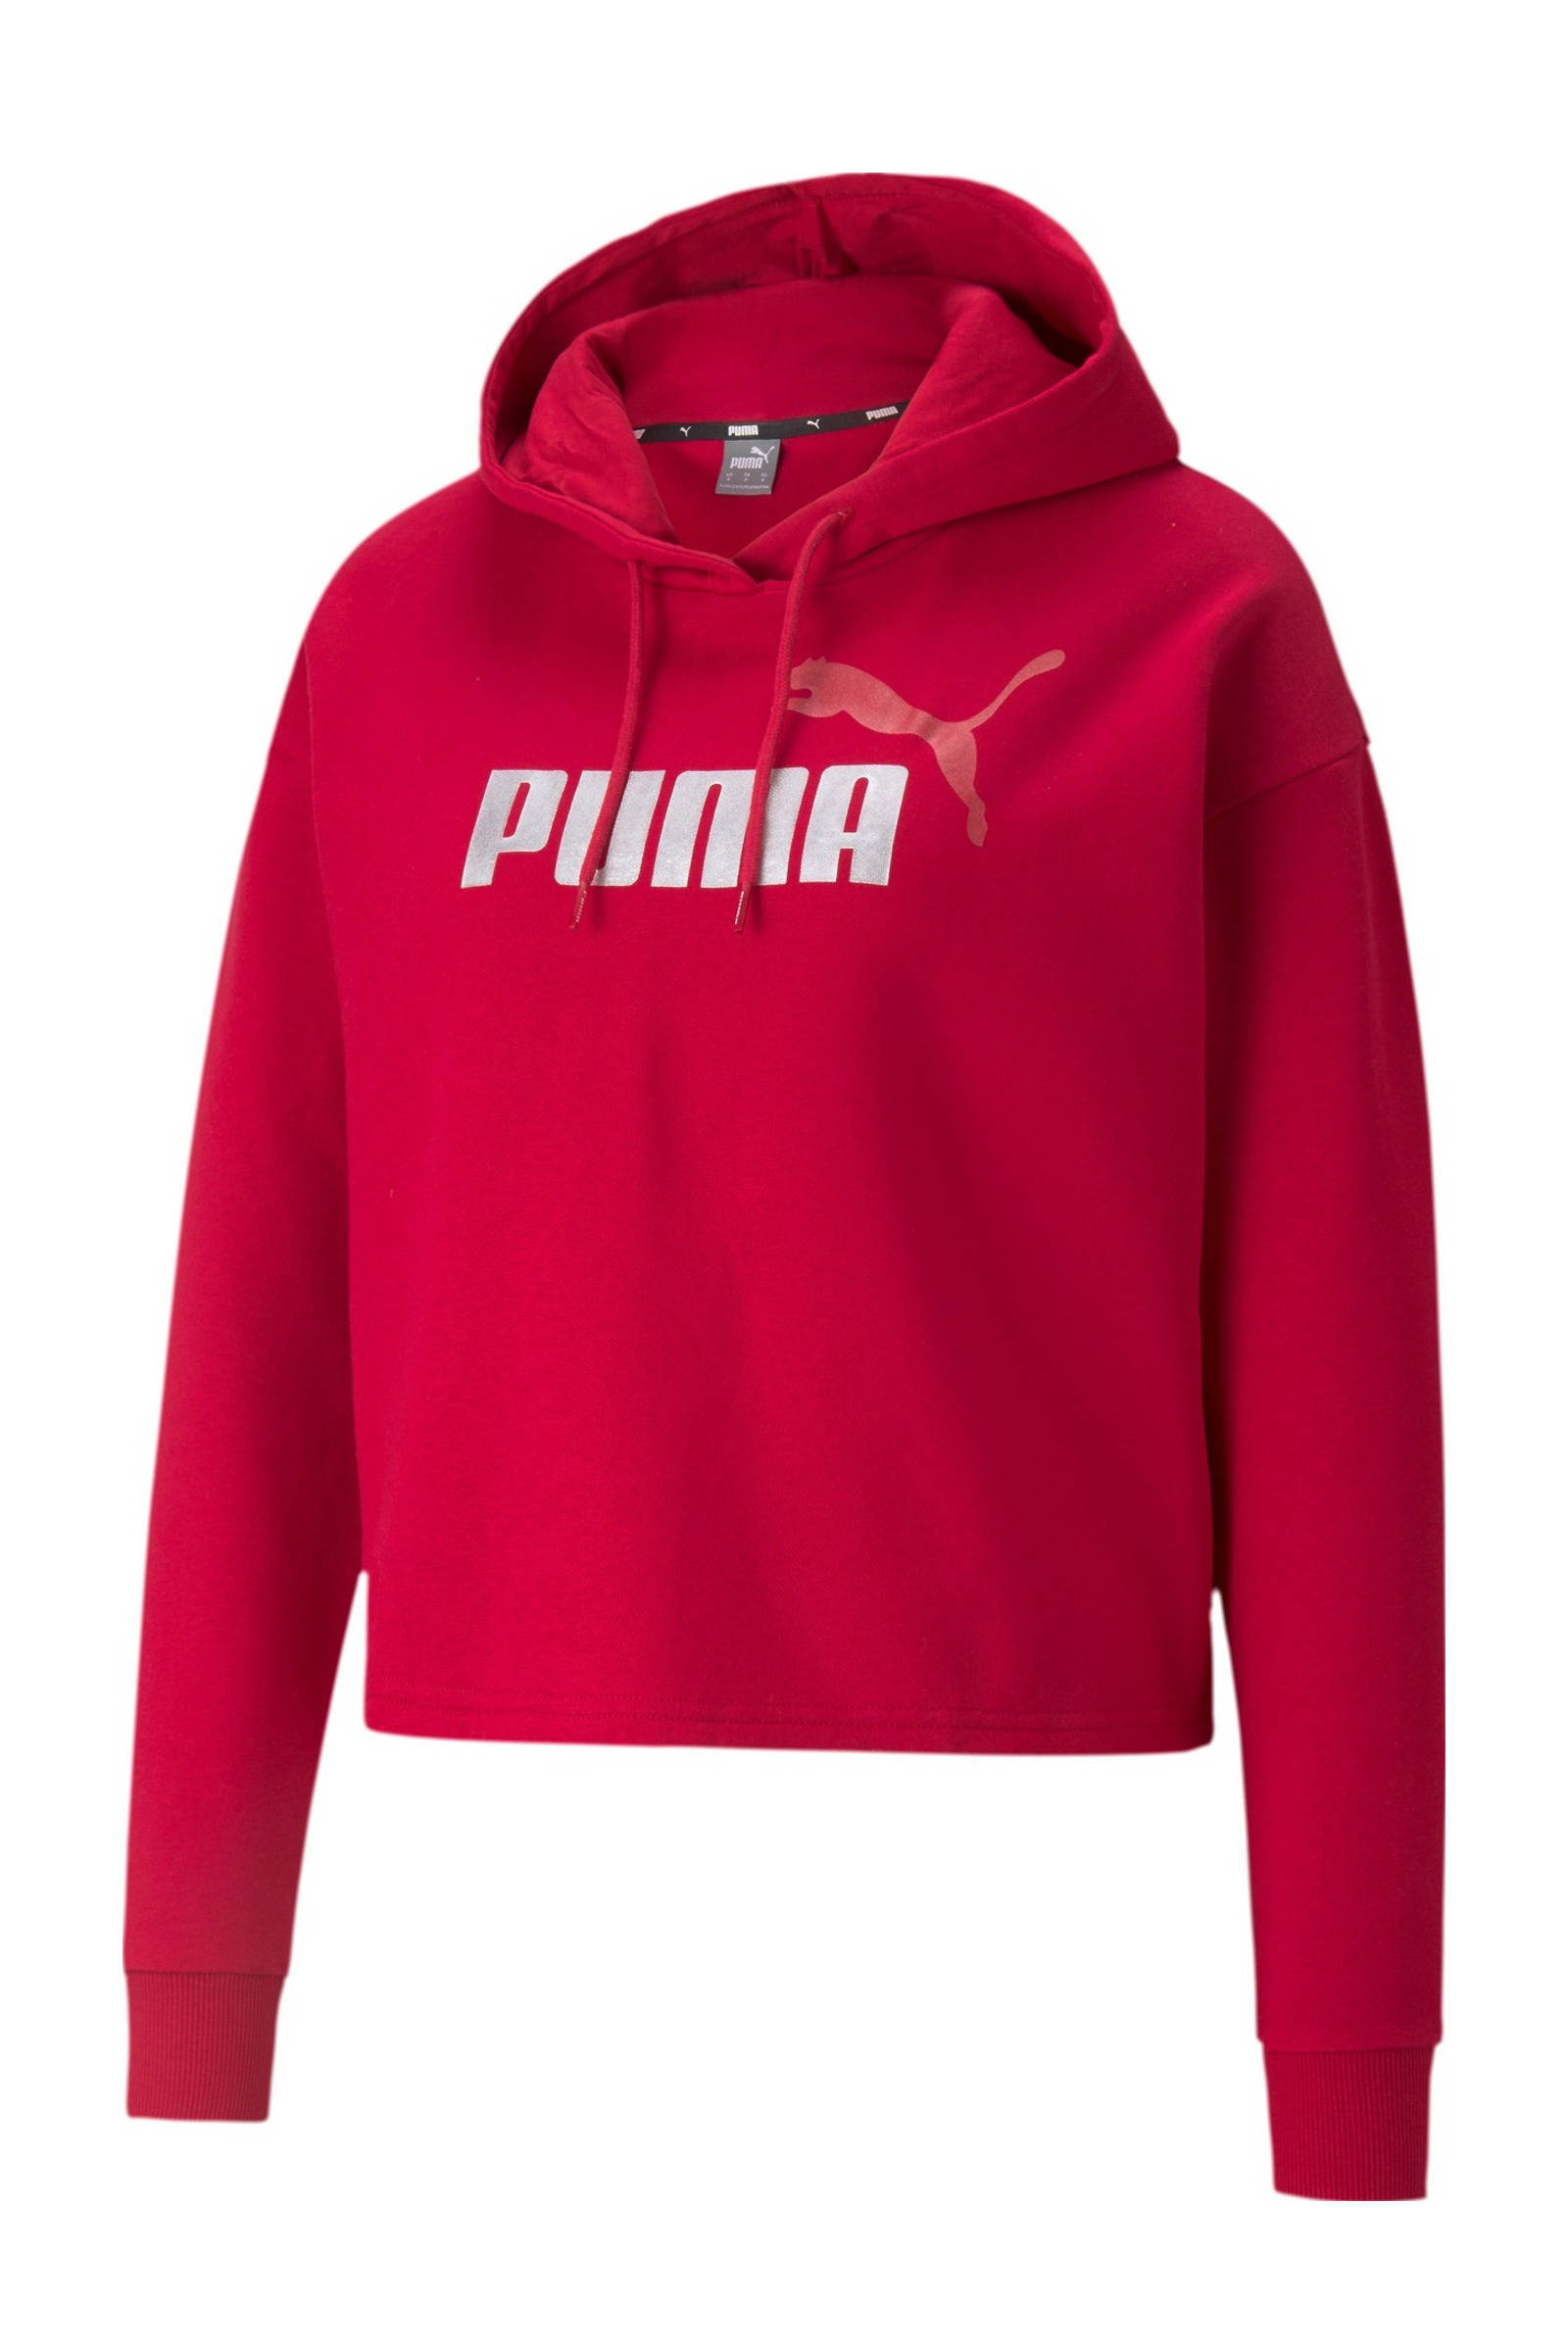 Puma cropped hoodie met logo rood/zilver online kopen